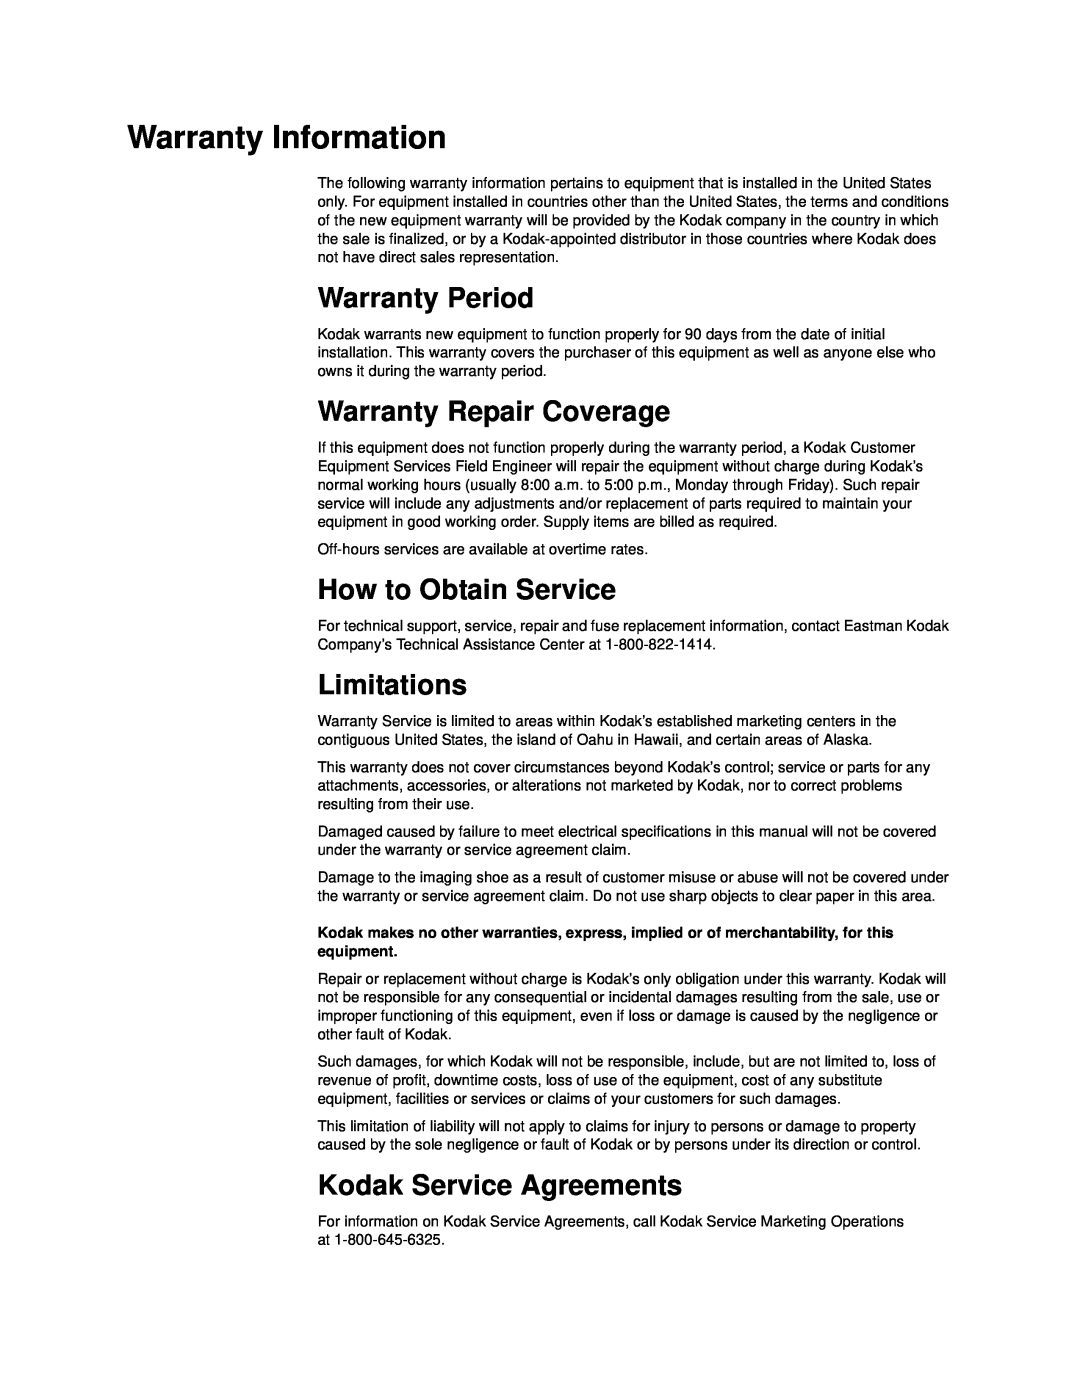 Kodak 20R manual Warranty Information, Warranty Period, Warranty Repair Coverage, How to Obtain Service, Limitations 